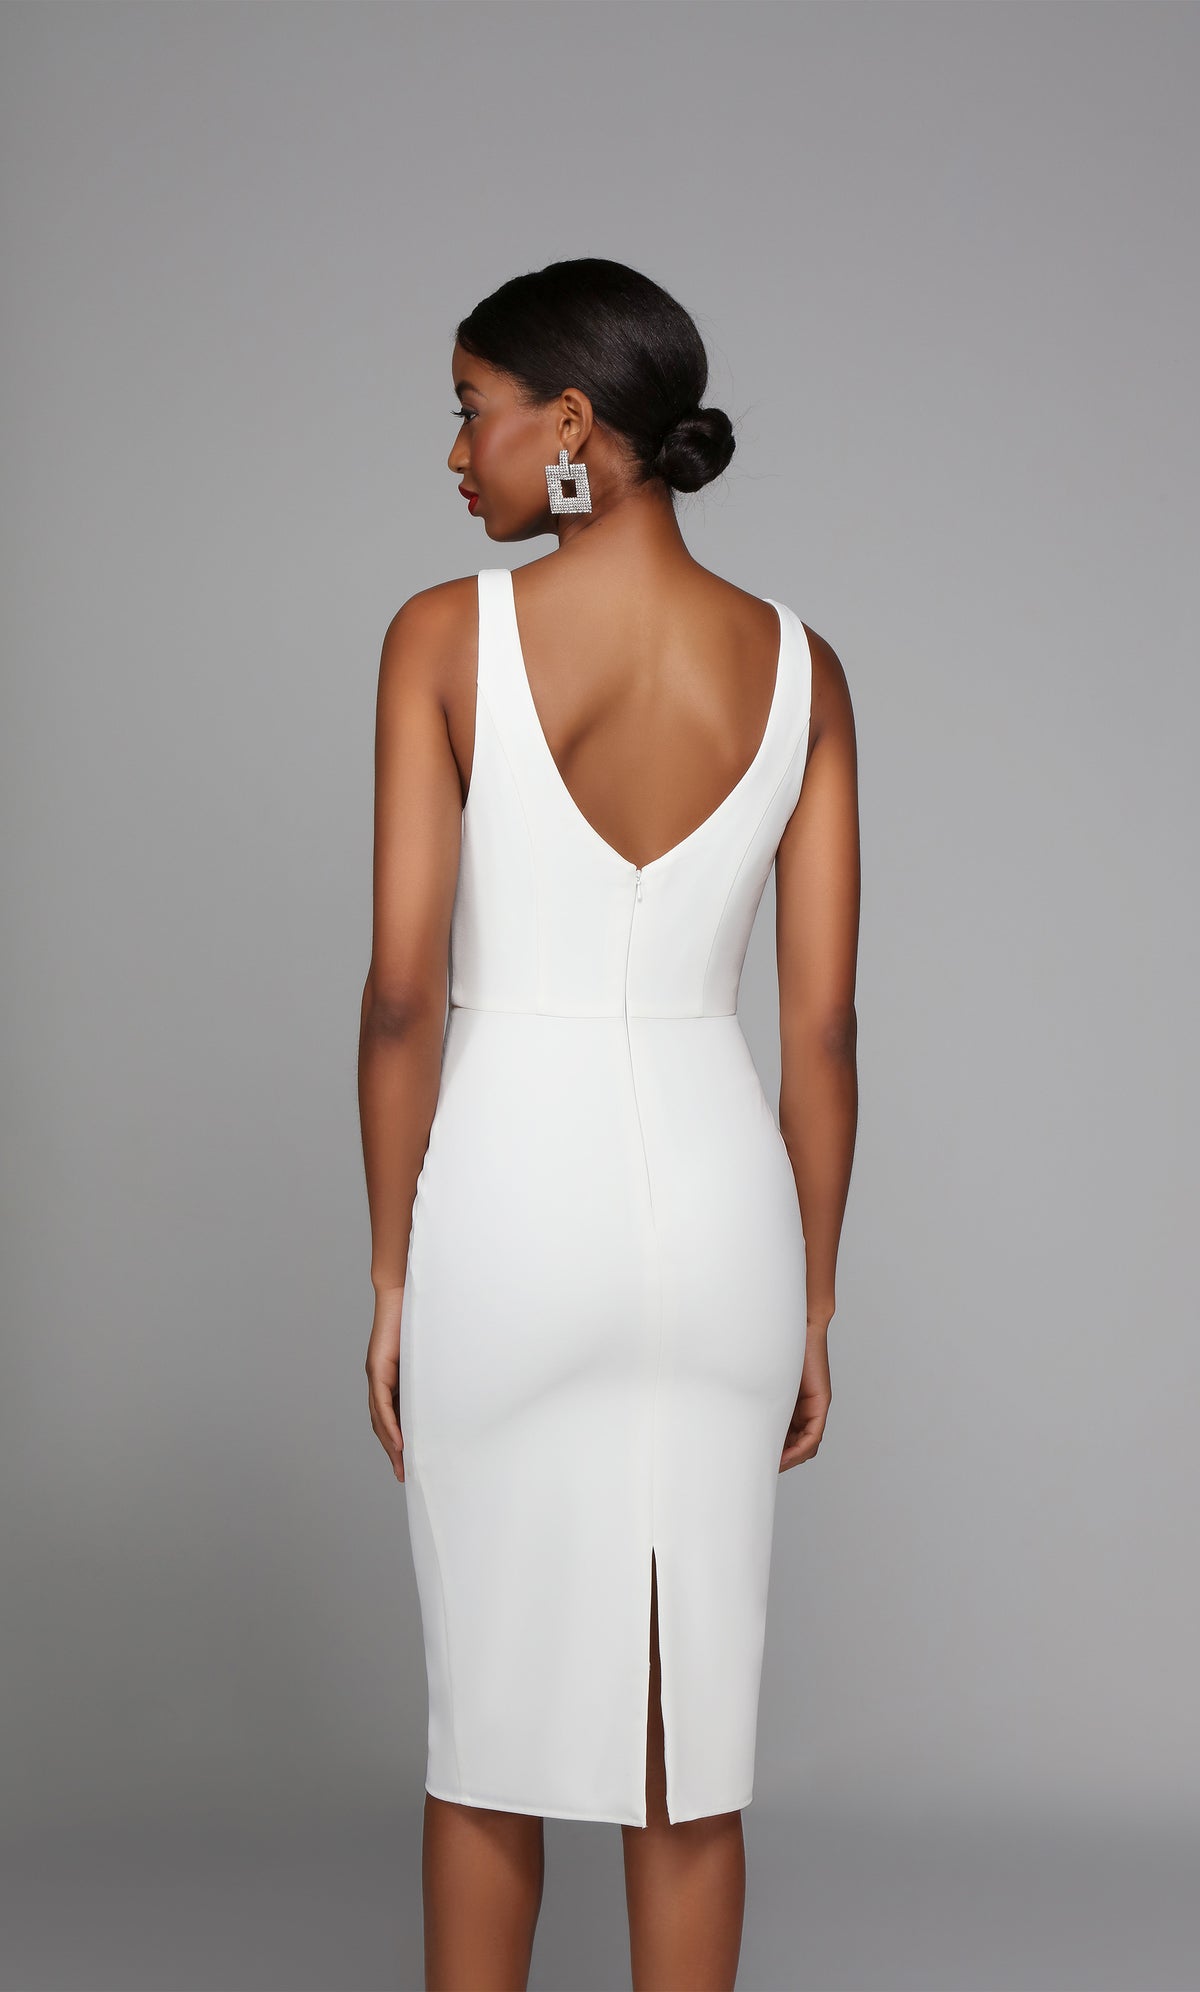 Sleeveless white engagement dress with an elegant V shaped back and a back slit.